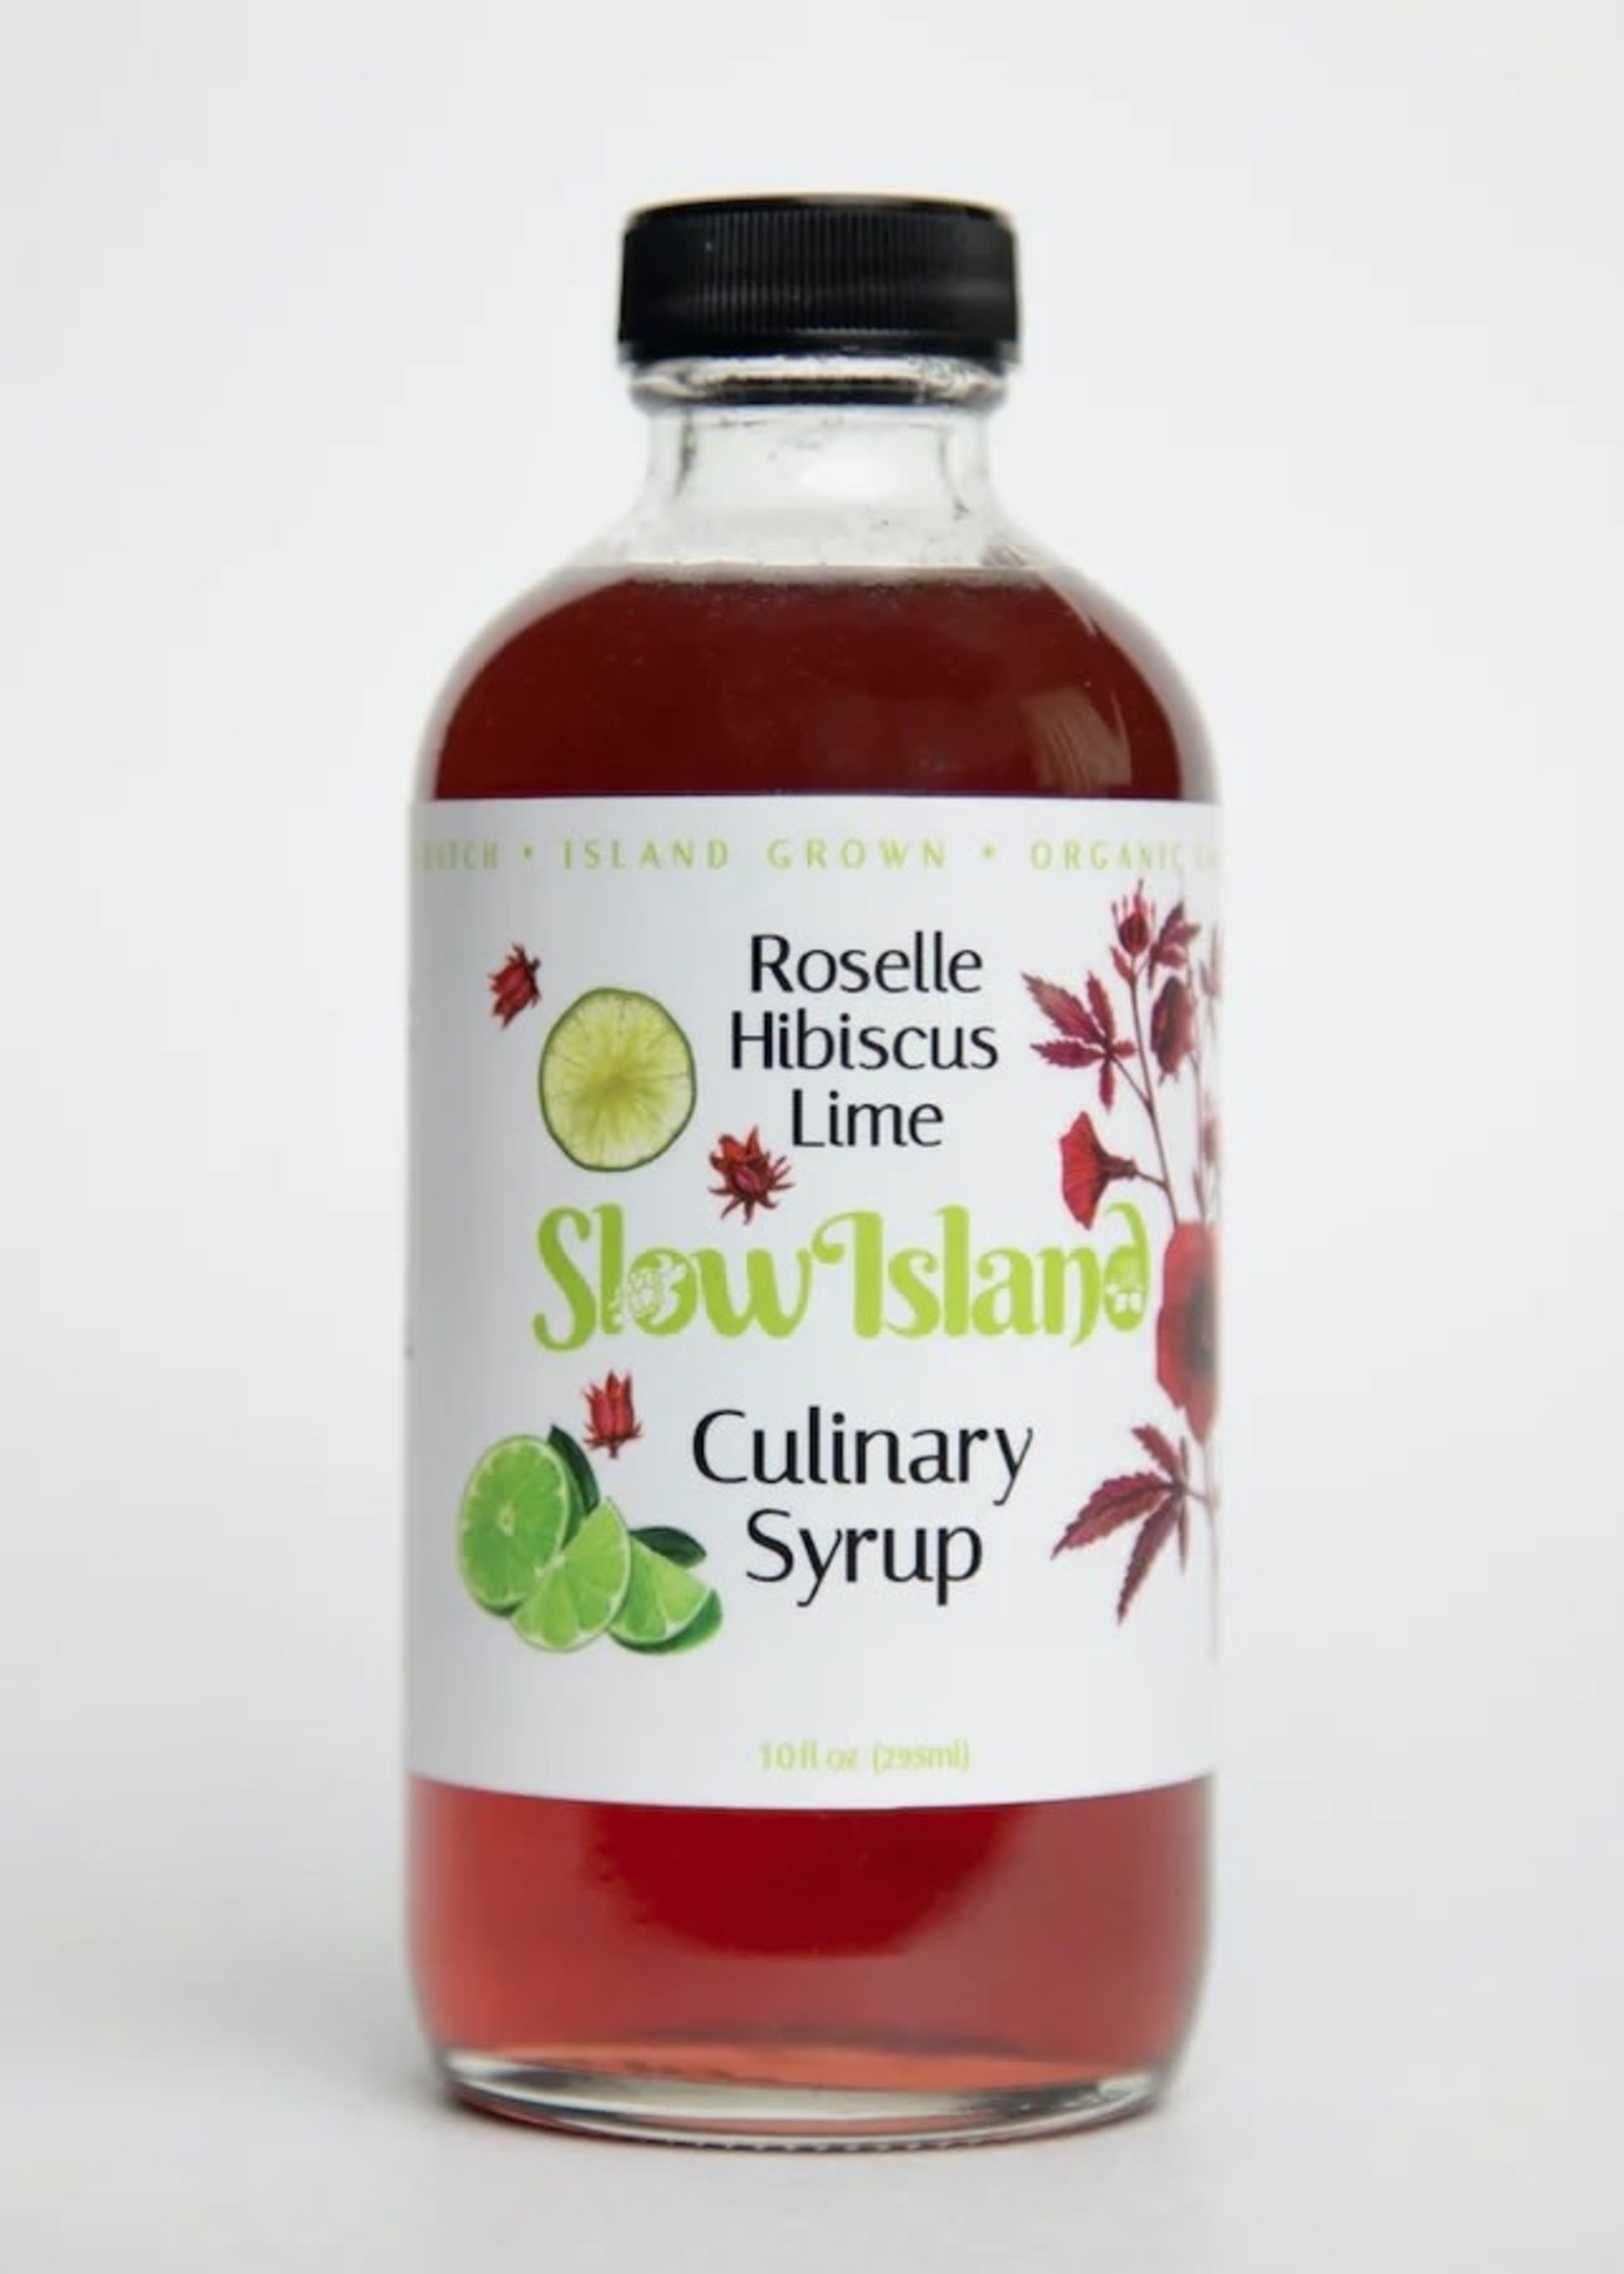 Slow Island Co. Culinary Syrups